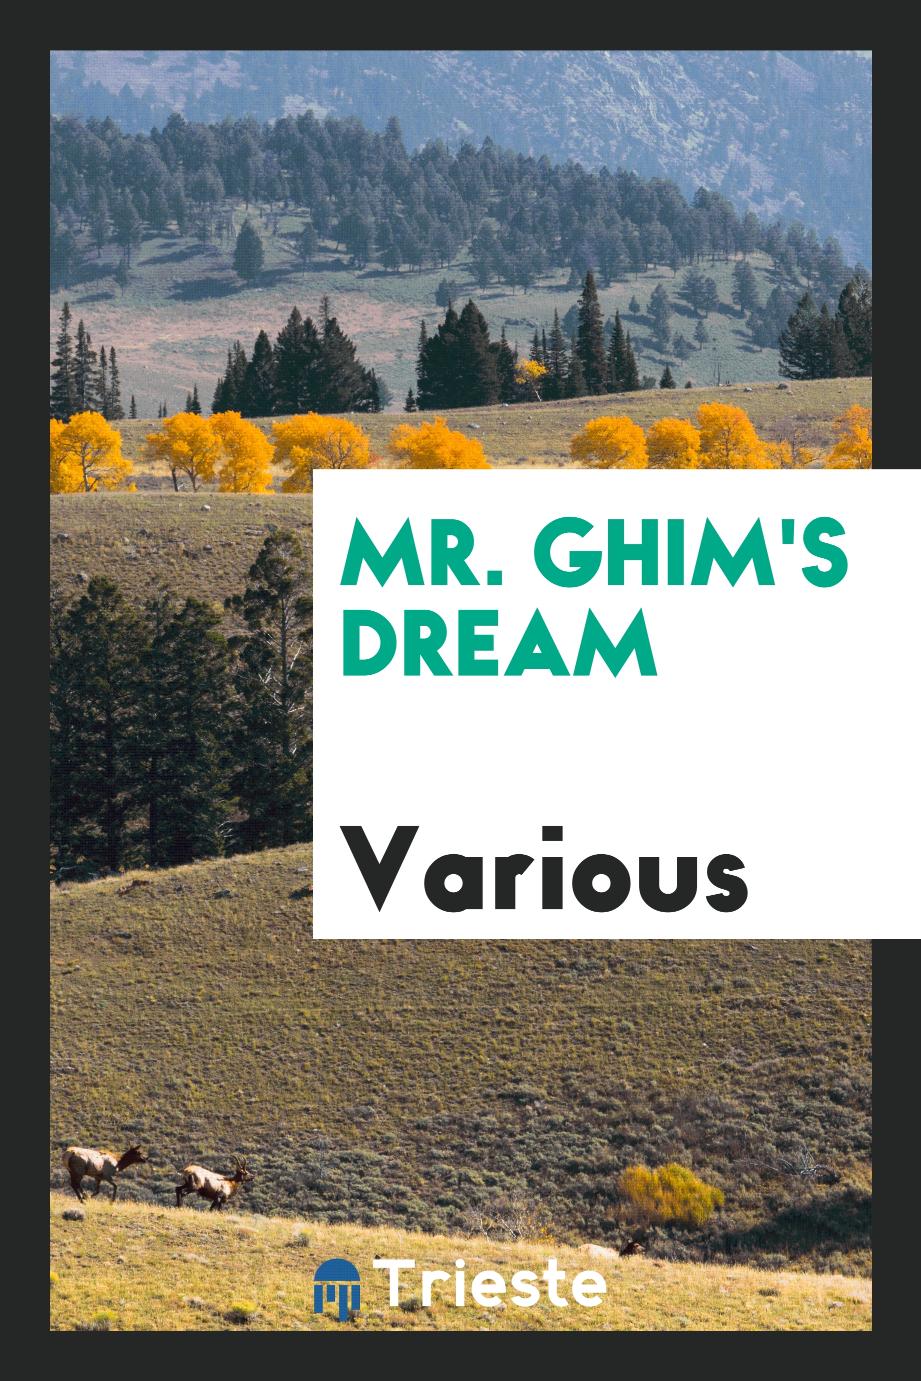 Mr. Ghim's dream